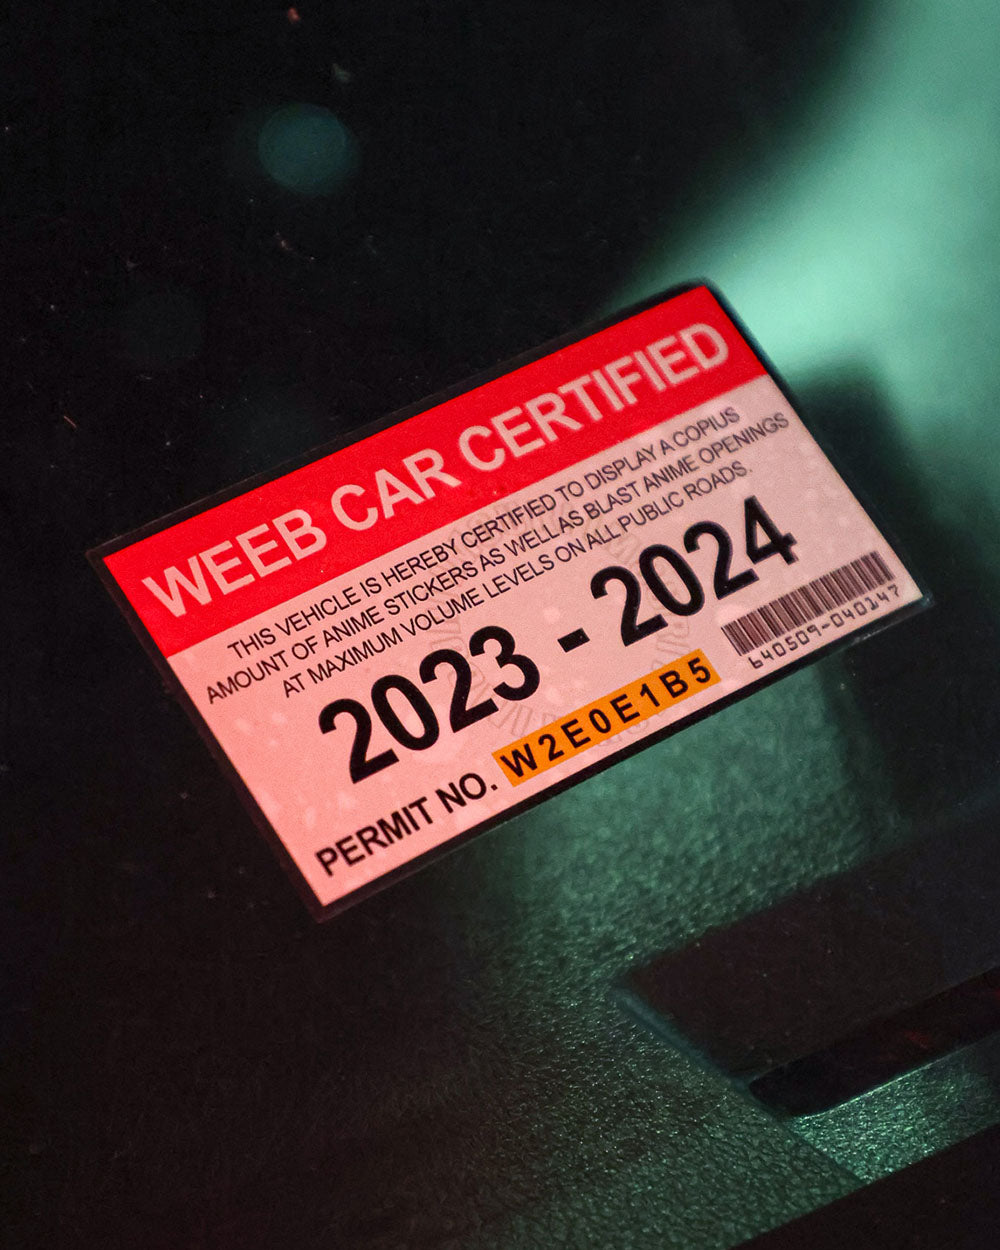 Weeb Car Certified Funny Anime Car Window Sticker